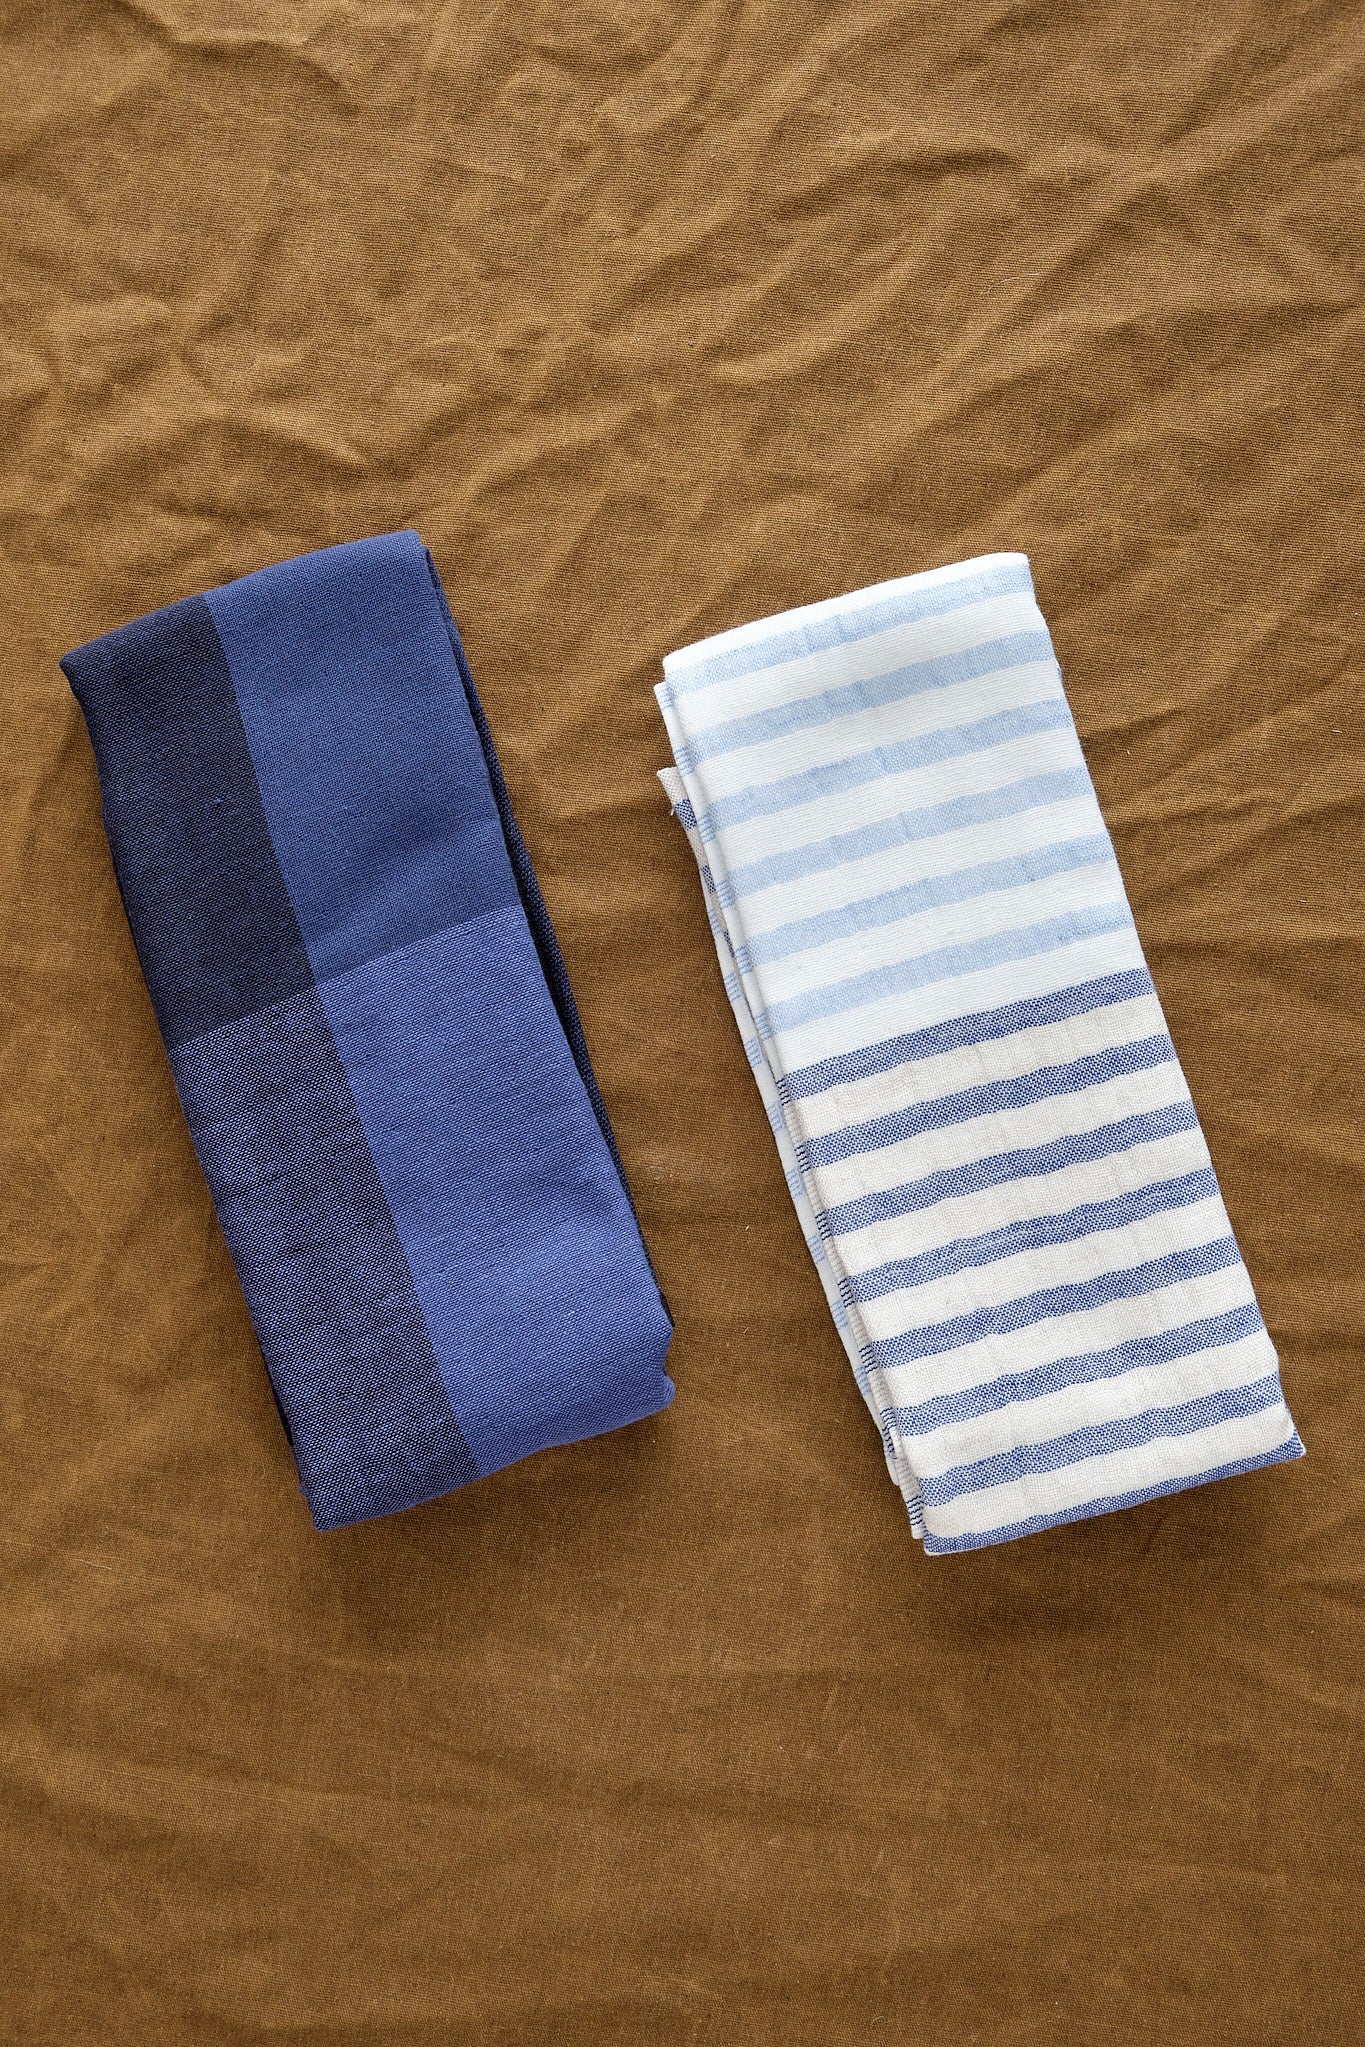 yoshii Chambray Block Hand Towel in Blue/Black